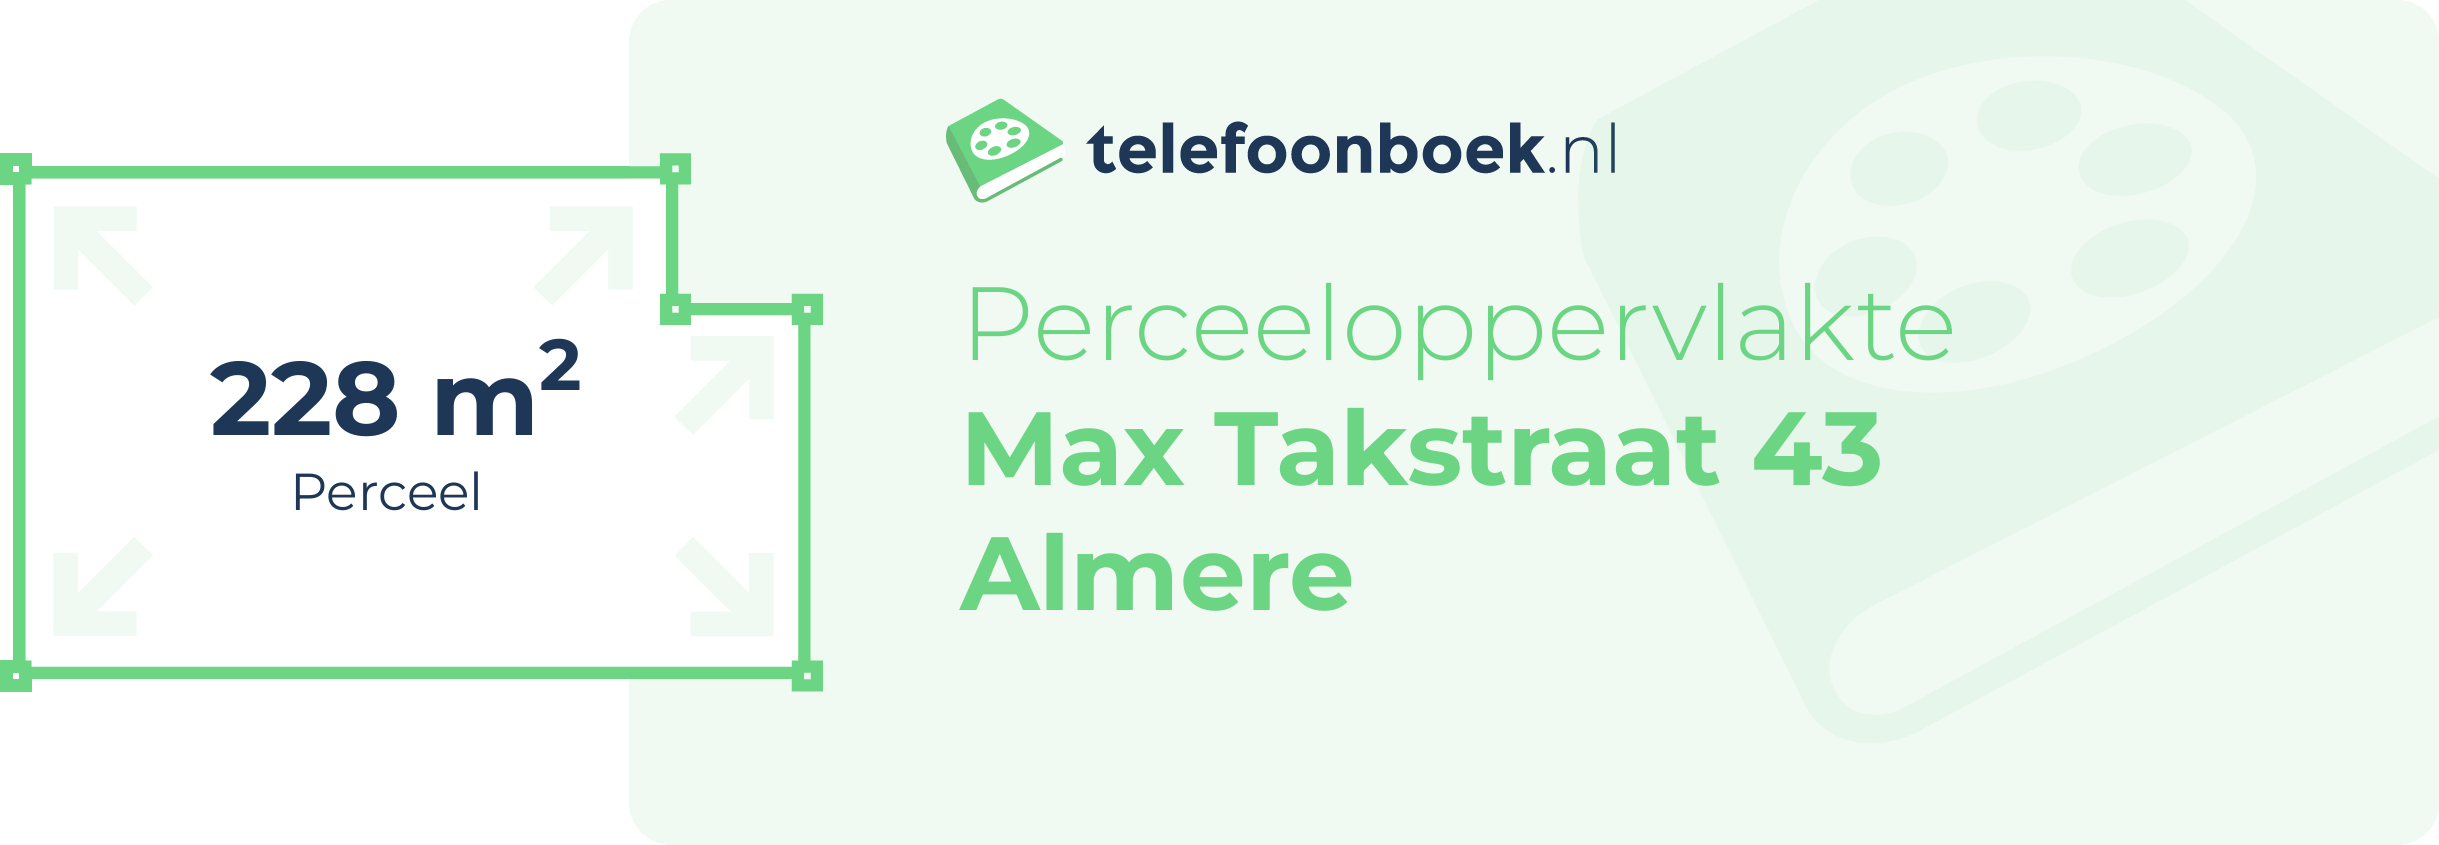 Perceeloppervlakte Max Takstraat 43 Almere